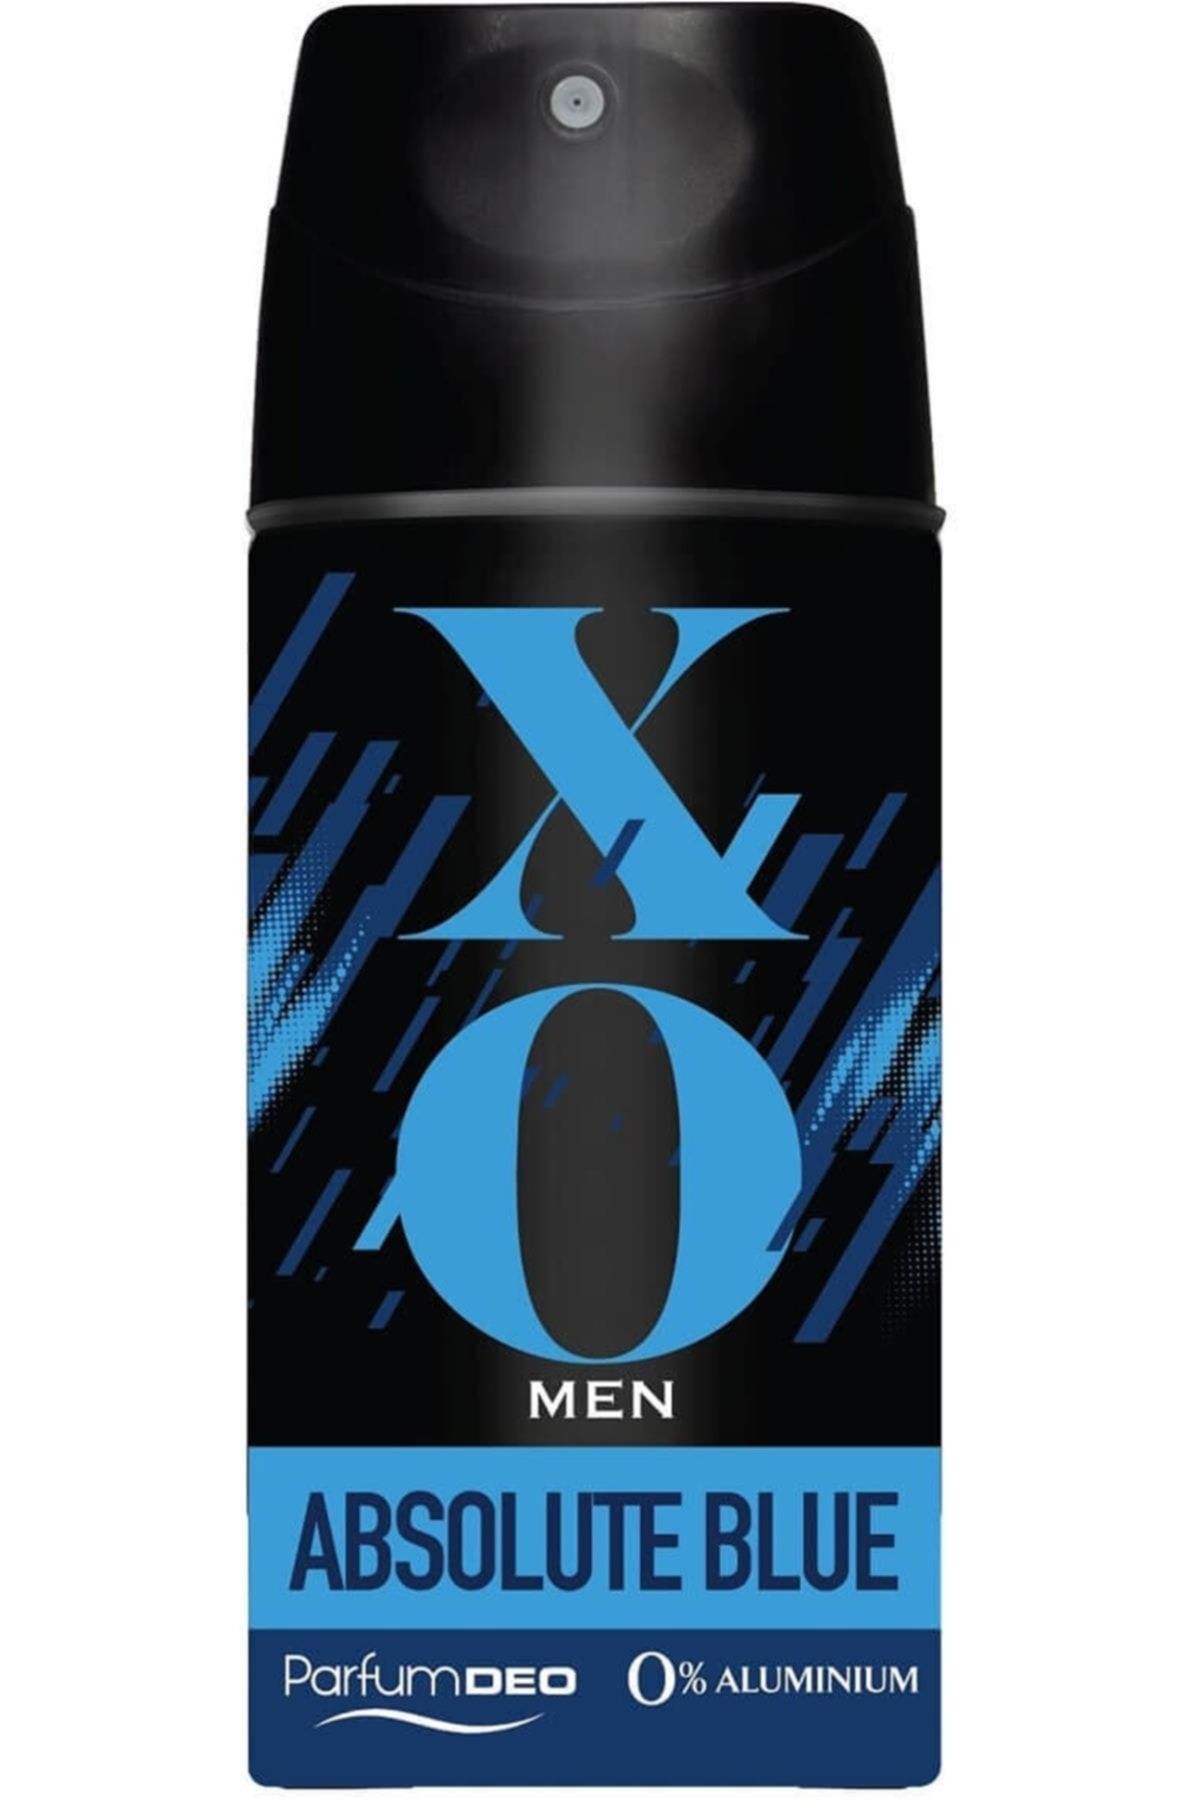 Xo Deodorant Absolute Blue 150ml EVXTZT1004274